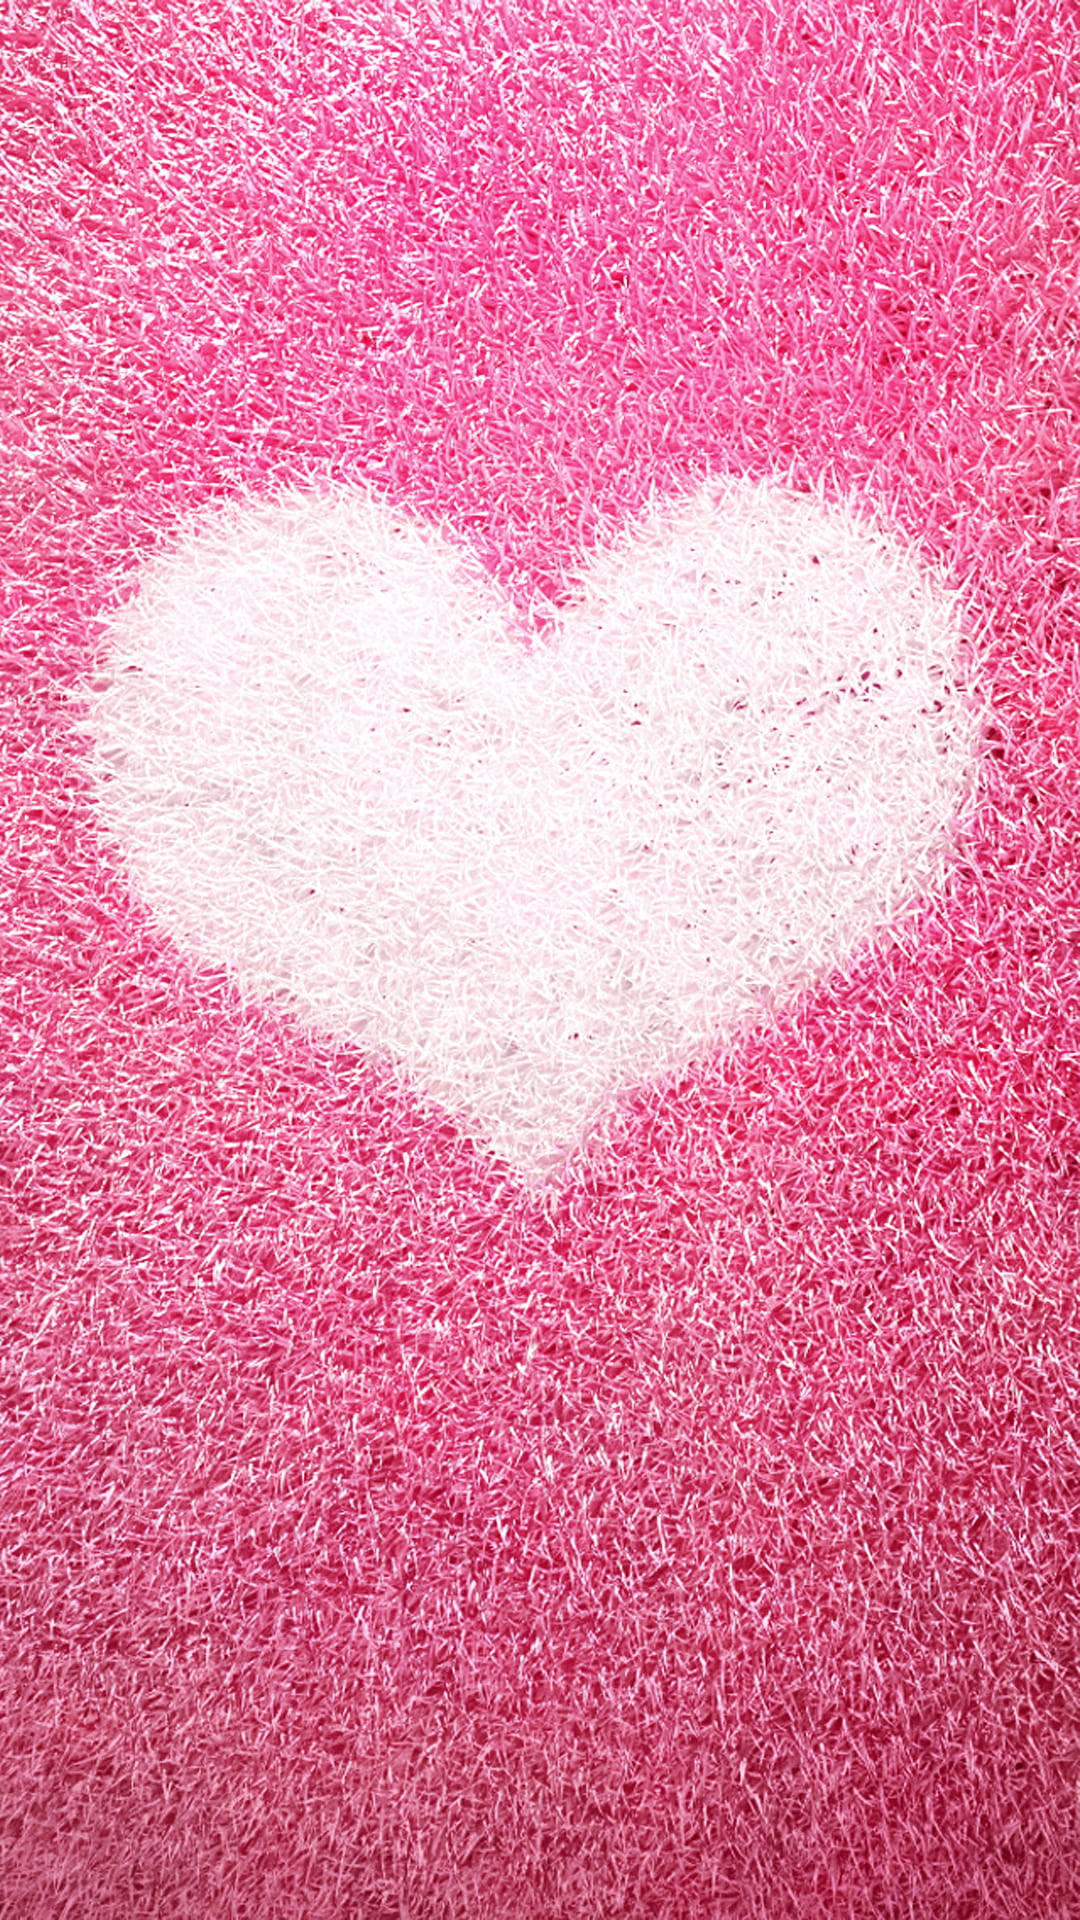 Textured Pink Heart Background